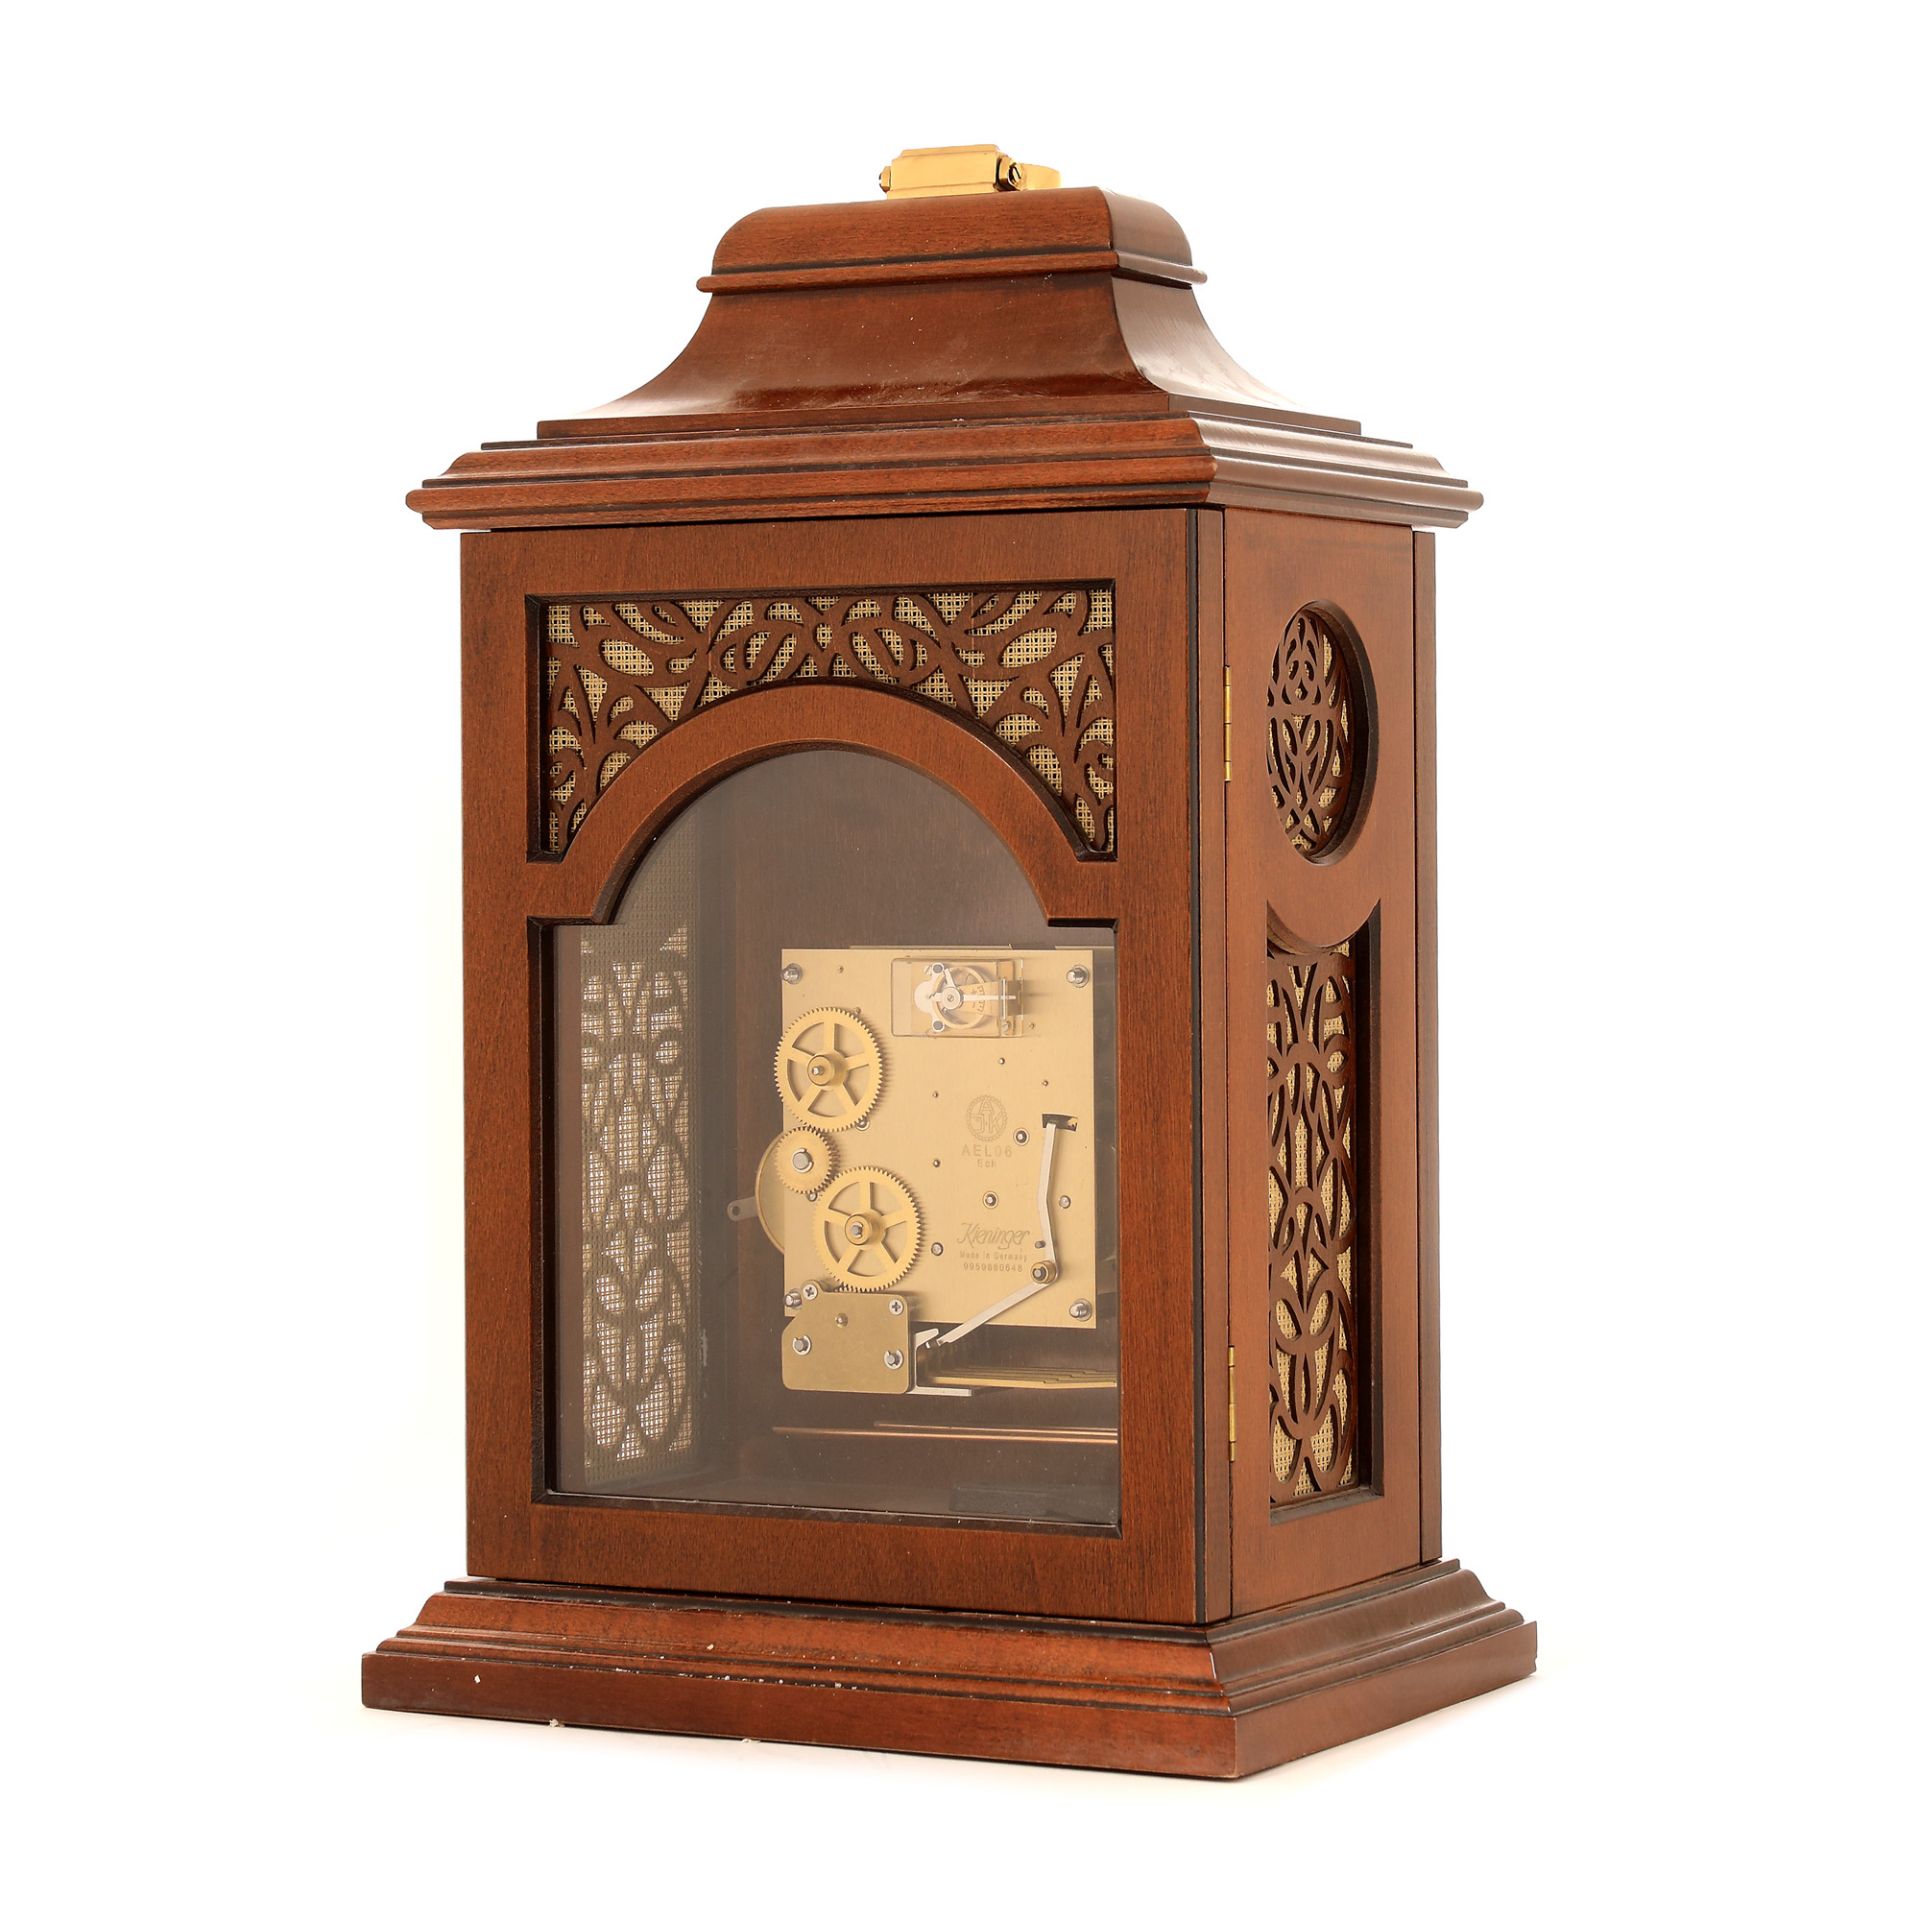 "Tempus fugit" - Kieninger clock, for the fireplace - Image 4 of 5